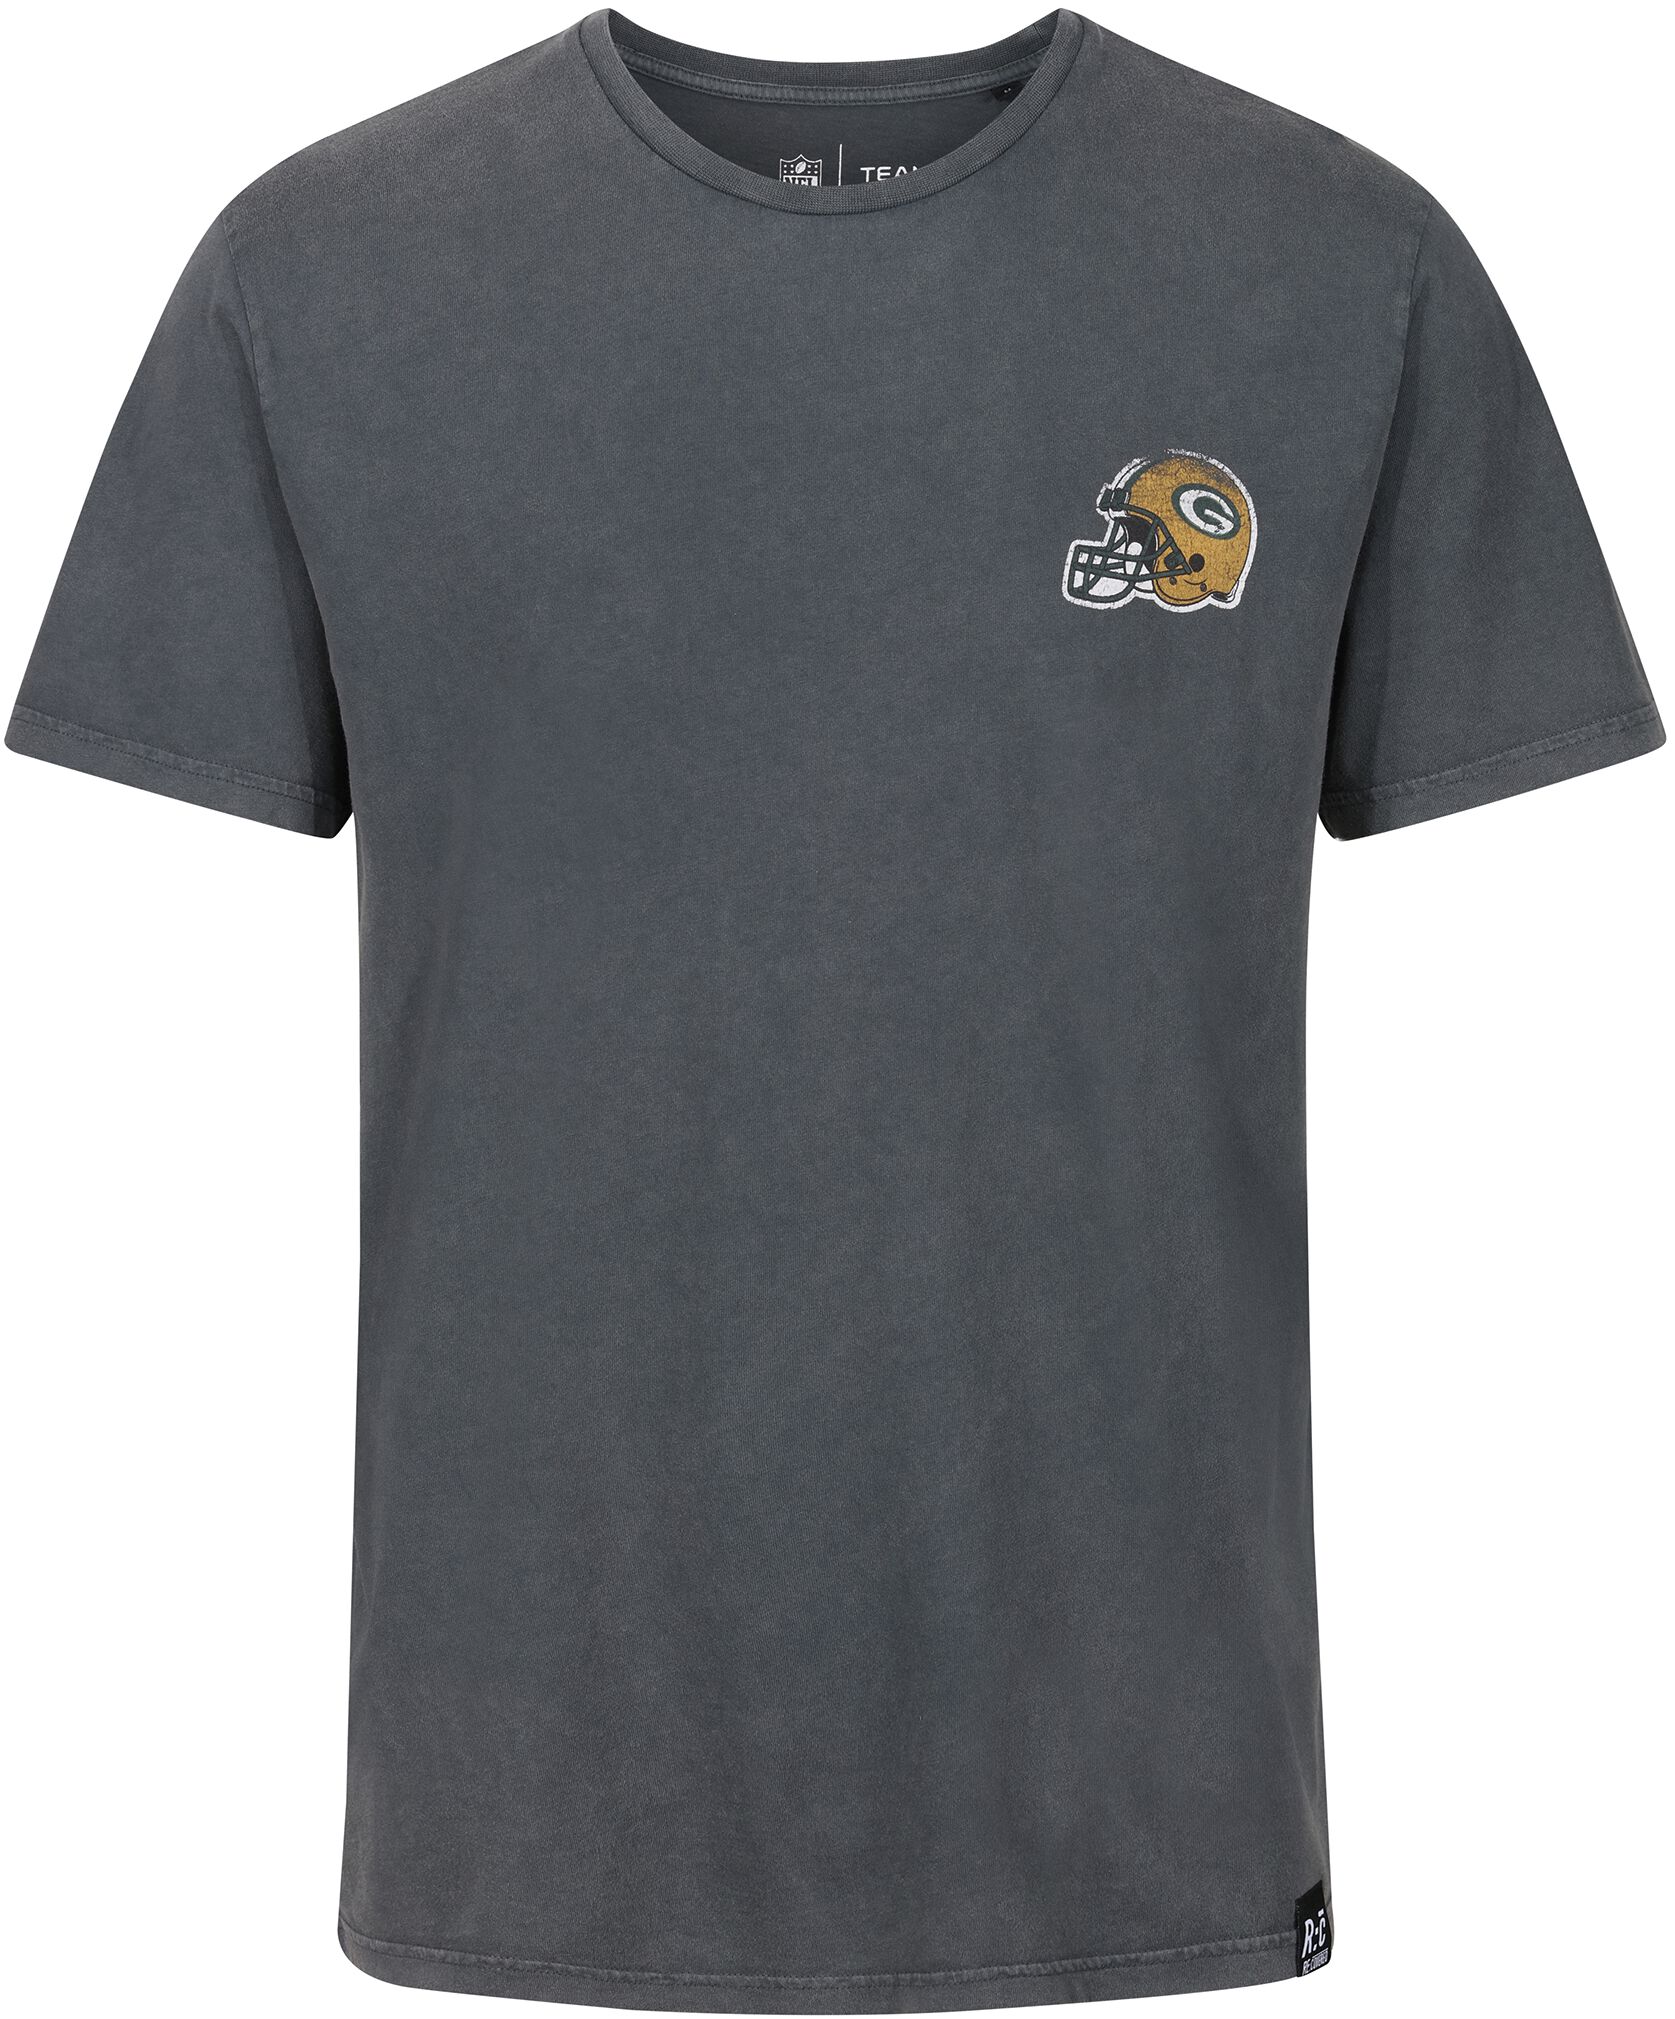 Recovered Clothing T-Shirt - NFL Packers College Black Washed - S bis XXL - für Männer - Größe XXL - multicolor